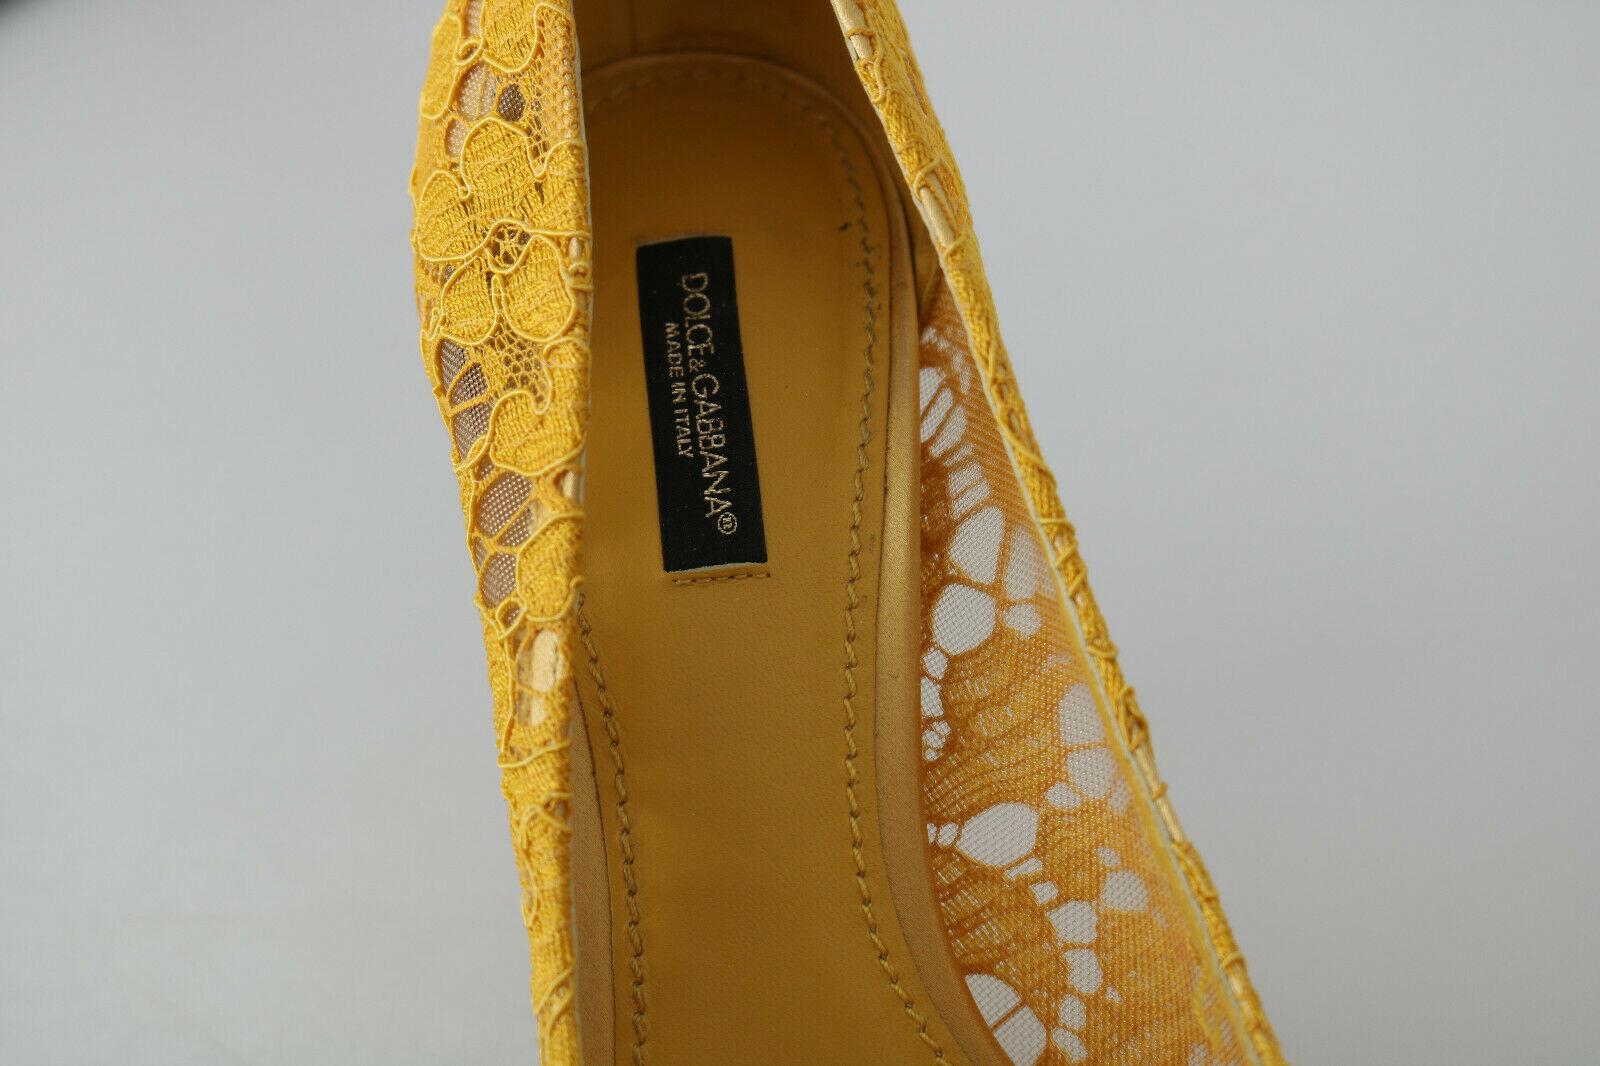 yellow floral heels